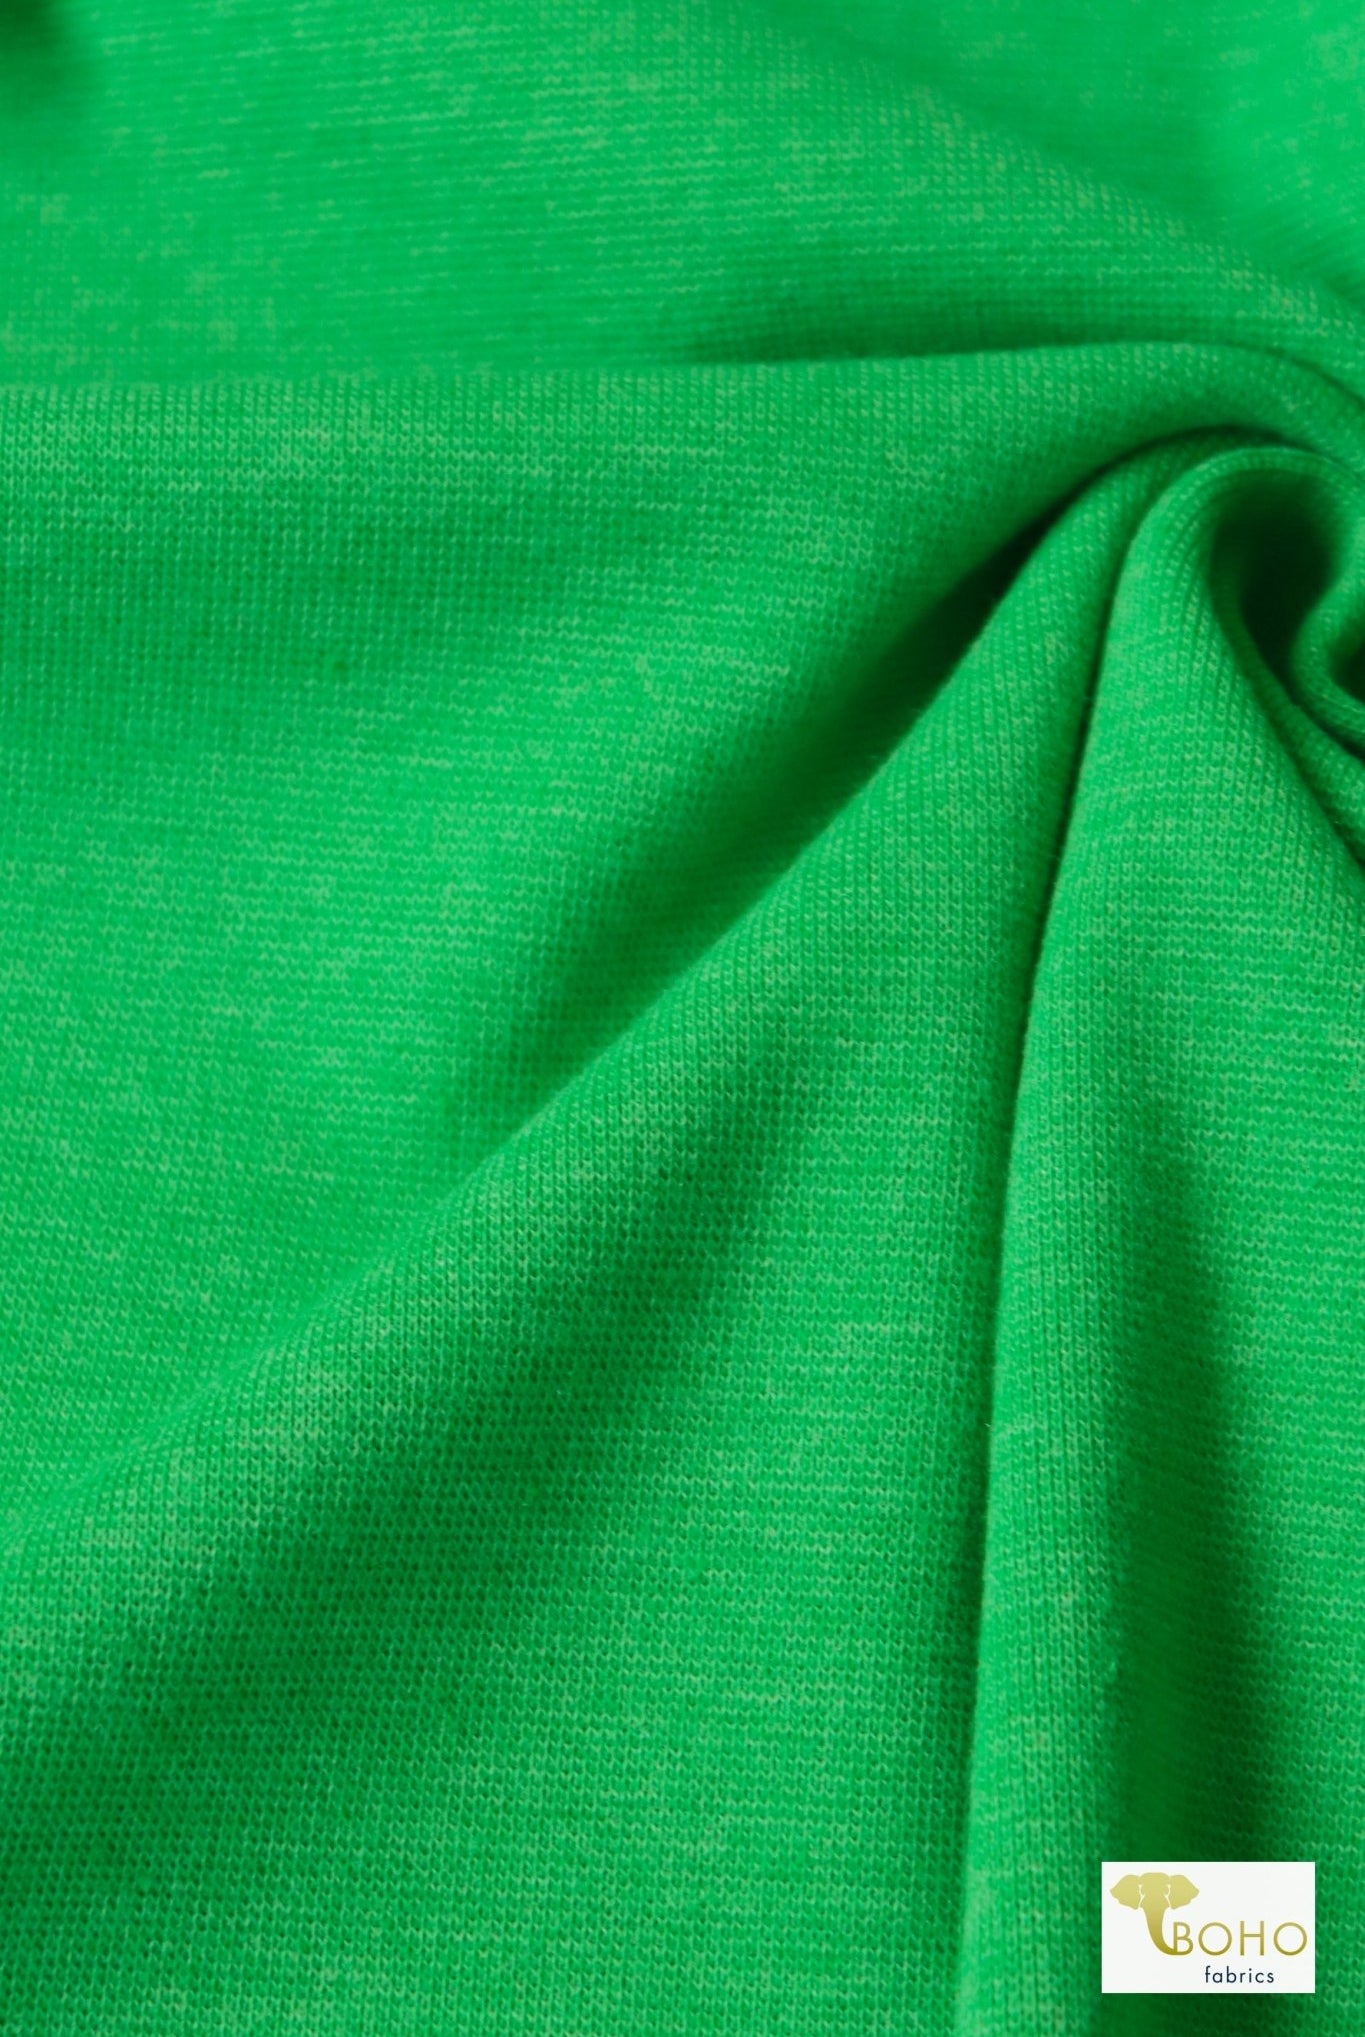 1x1 Rib Knit, Lime Green. SOLD BY THE HALF YARD! - Boho Fabrics